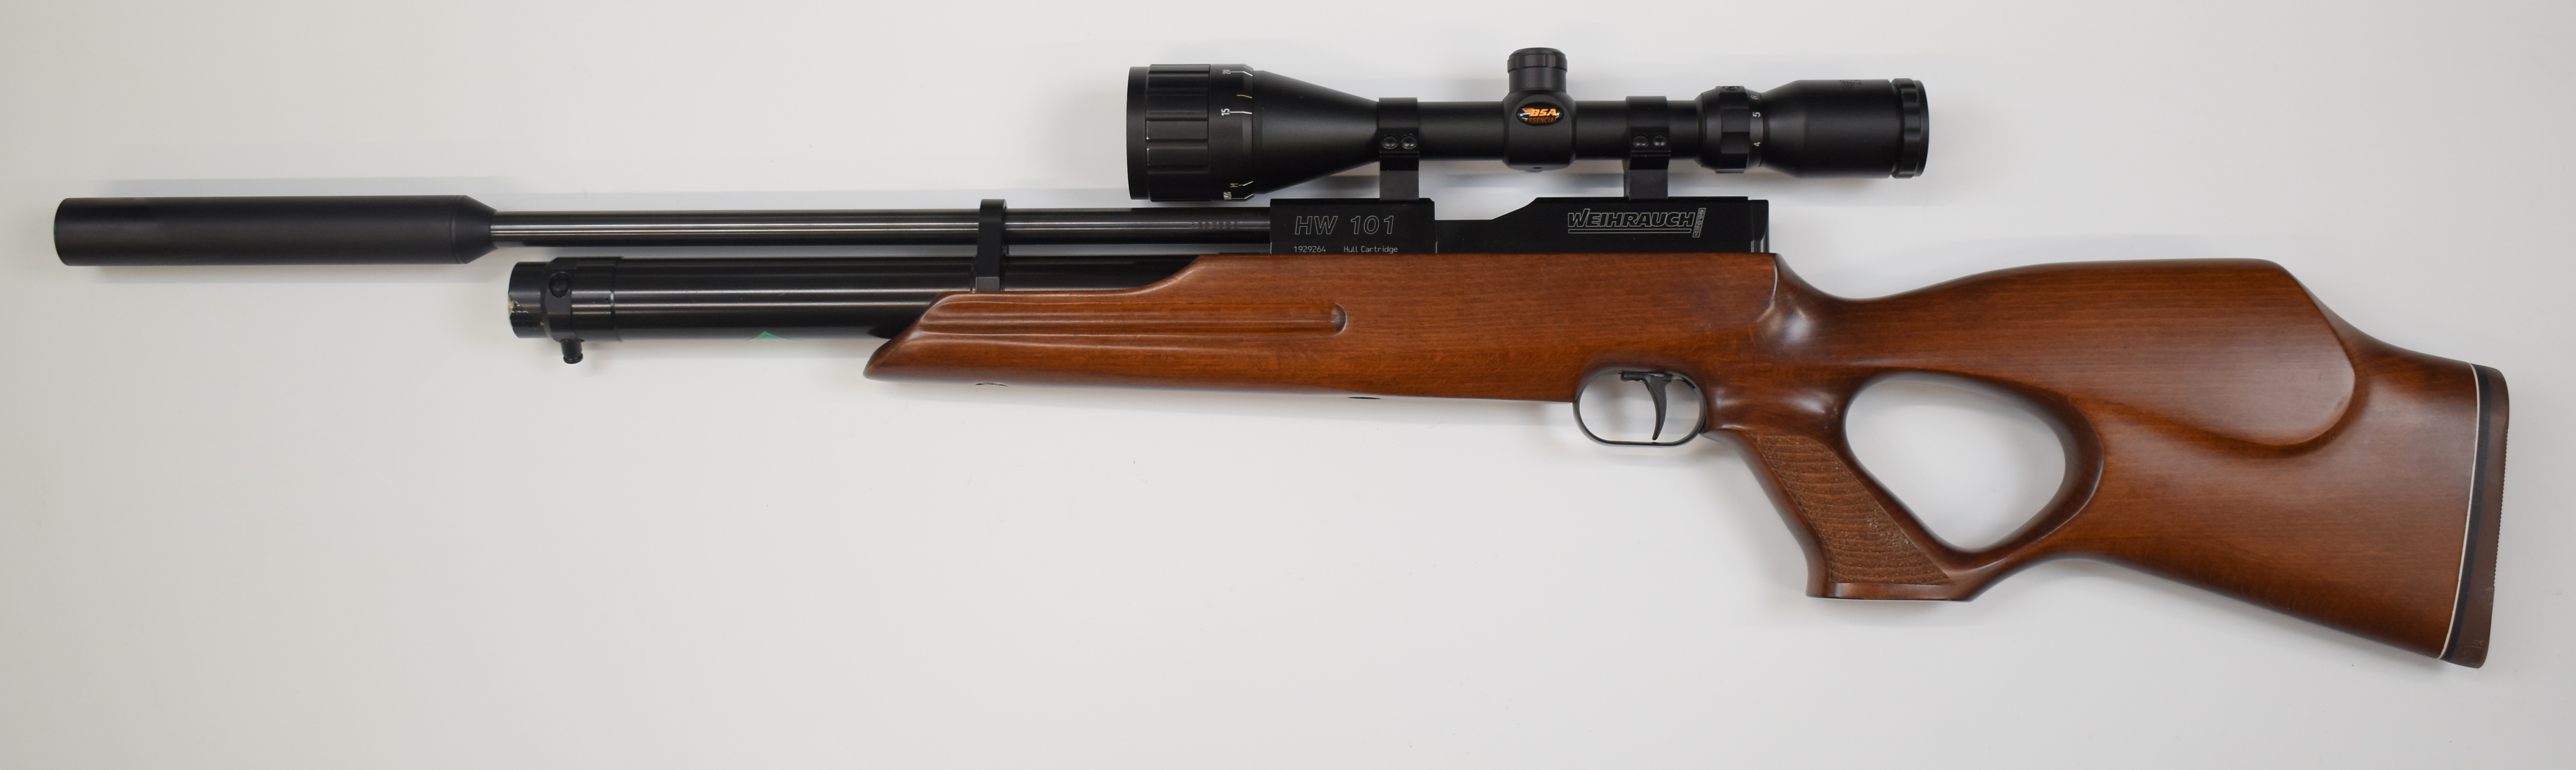 Weihrauch HW101 .177 PCP air rifle with textured semi-pistol grip, raised cheek piece, adjustable - Image 6 of 10